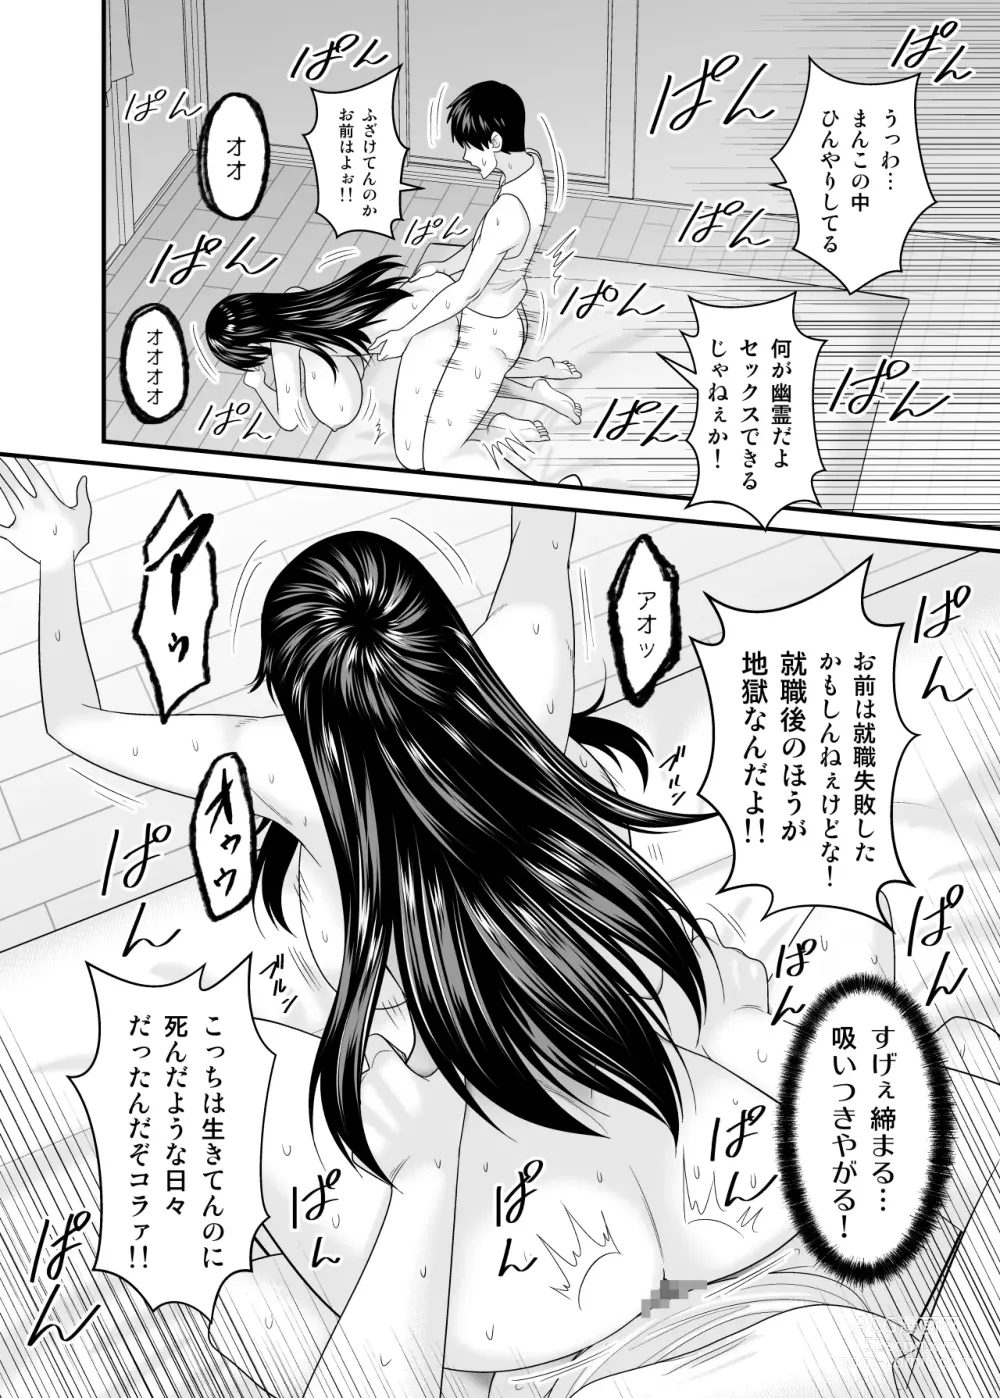 Page 29 of doujinshi ヤバい事故物件に女幽霊が出たけど無職底辺の俺はセックスしまくる